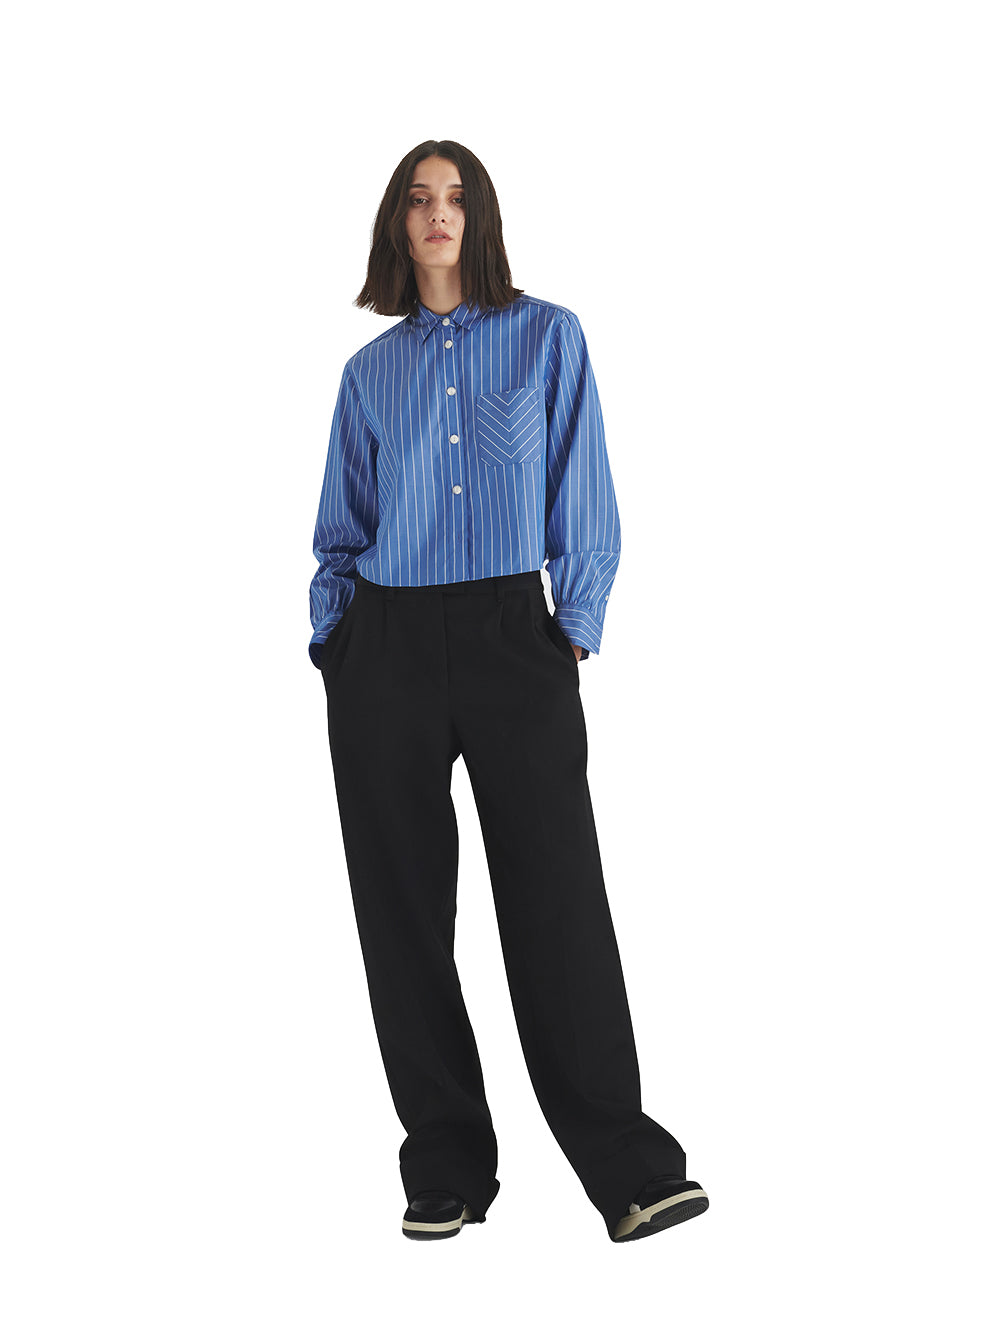 Maxine Stripe Cropped Shirt (Blue Stripe)